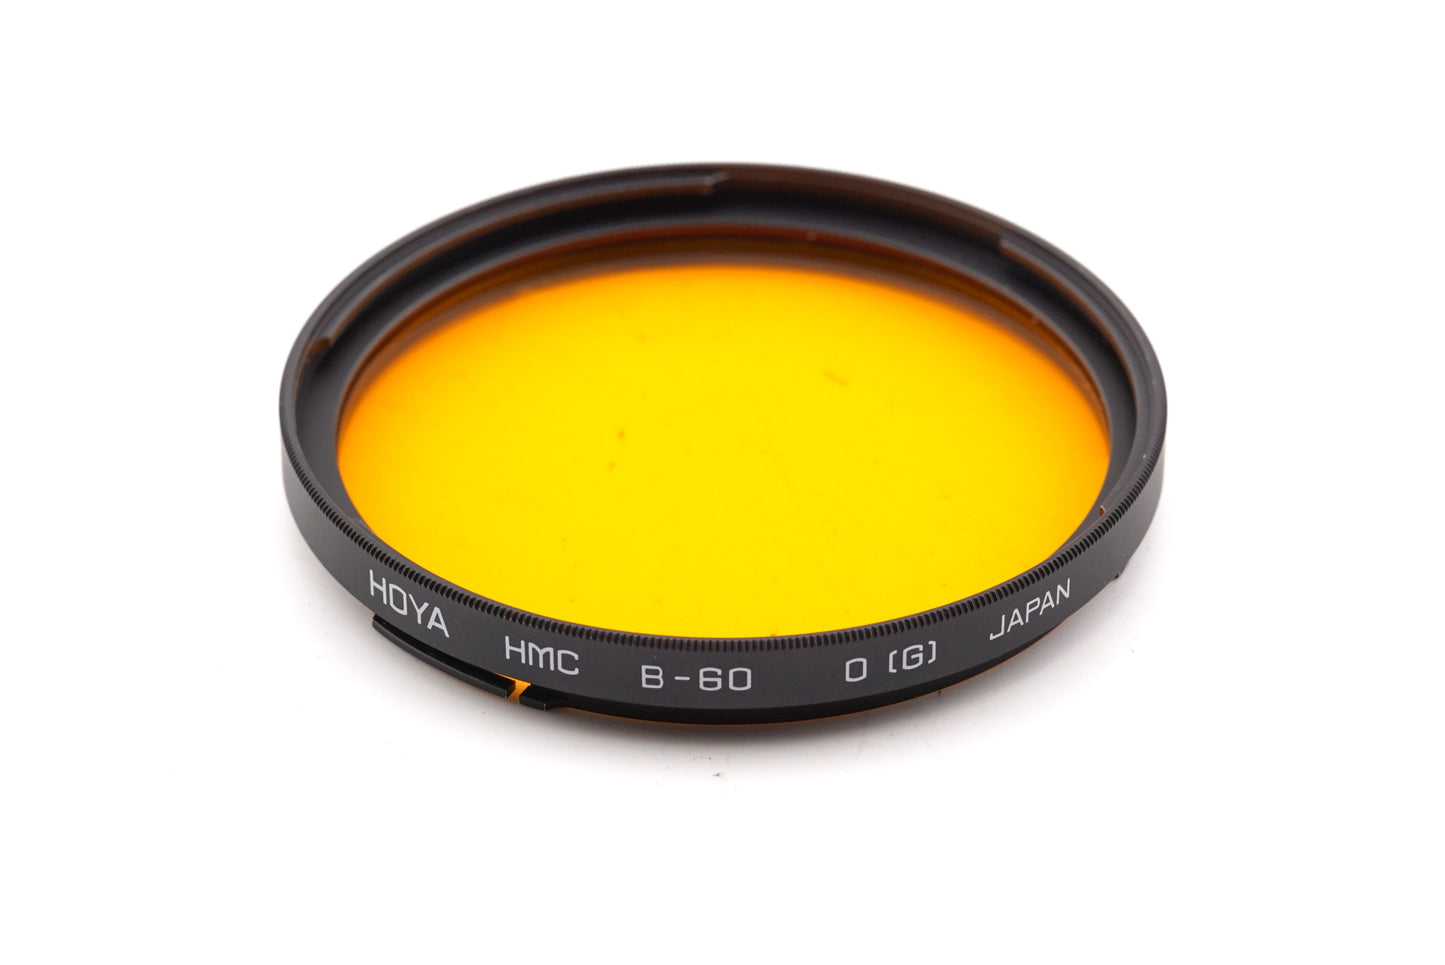 Hoya B60 Orange Filter O(G) HMC - Accessory